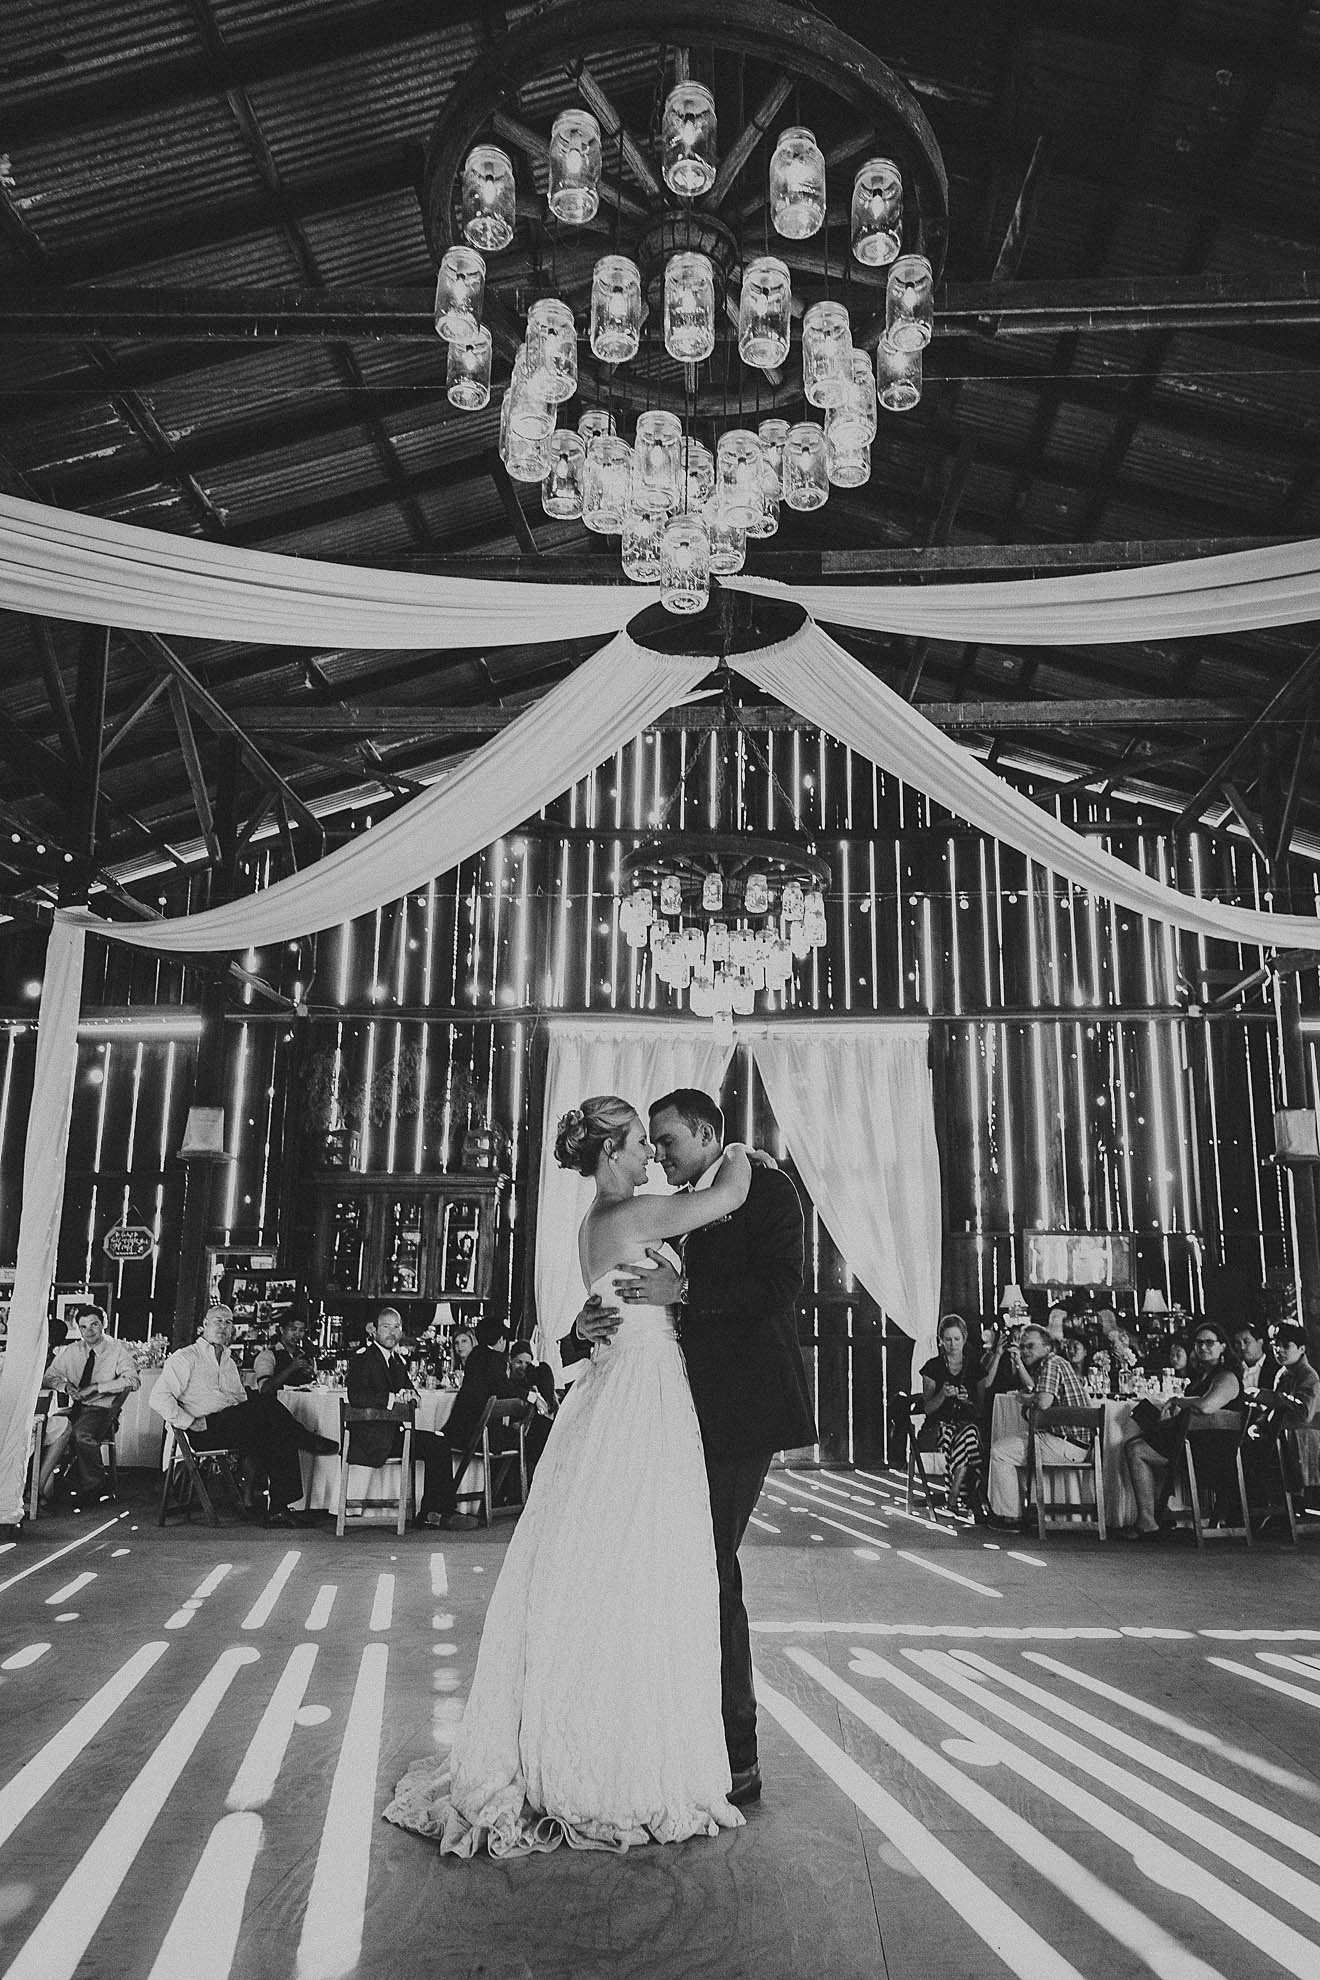 Dana Powers Barn Wedding by Michael Stephens Photography